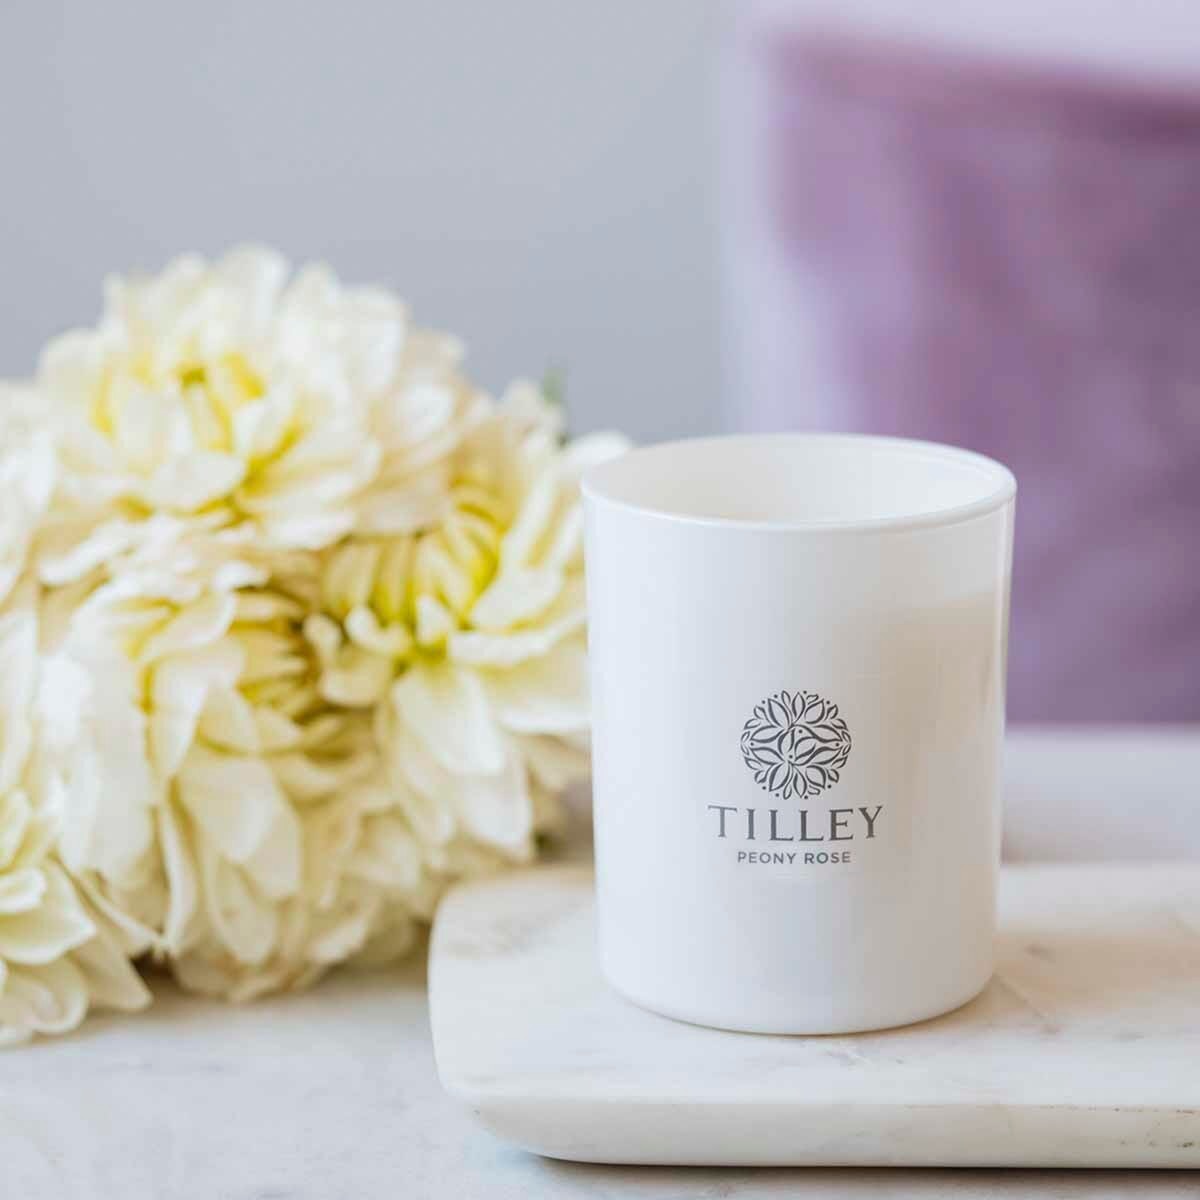 Tilley 微醺大豆香氛蠟燭2入組 木蘭與綠茶 + 牡丹玫瑰